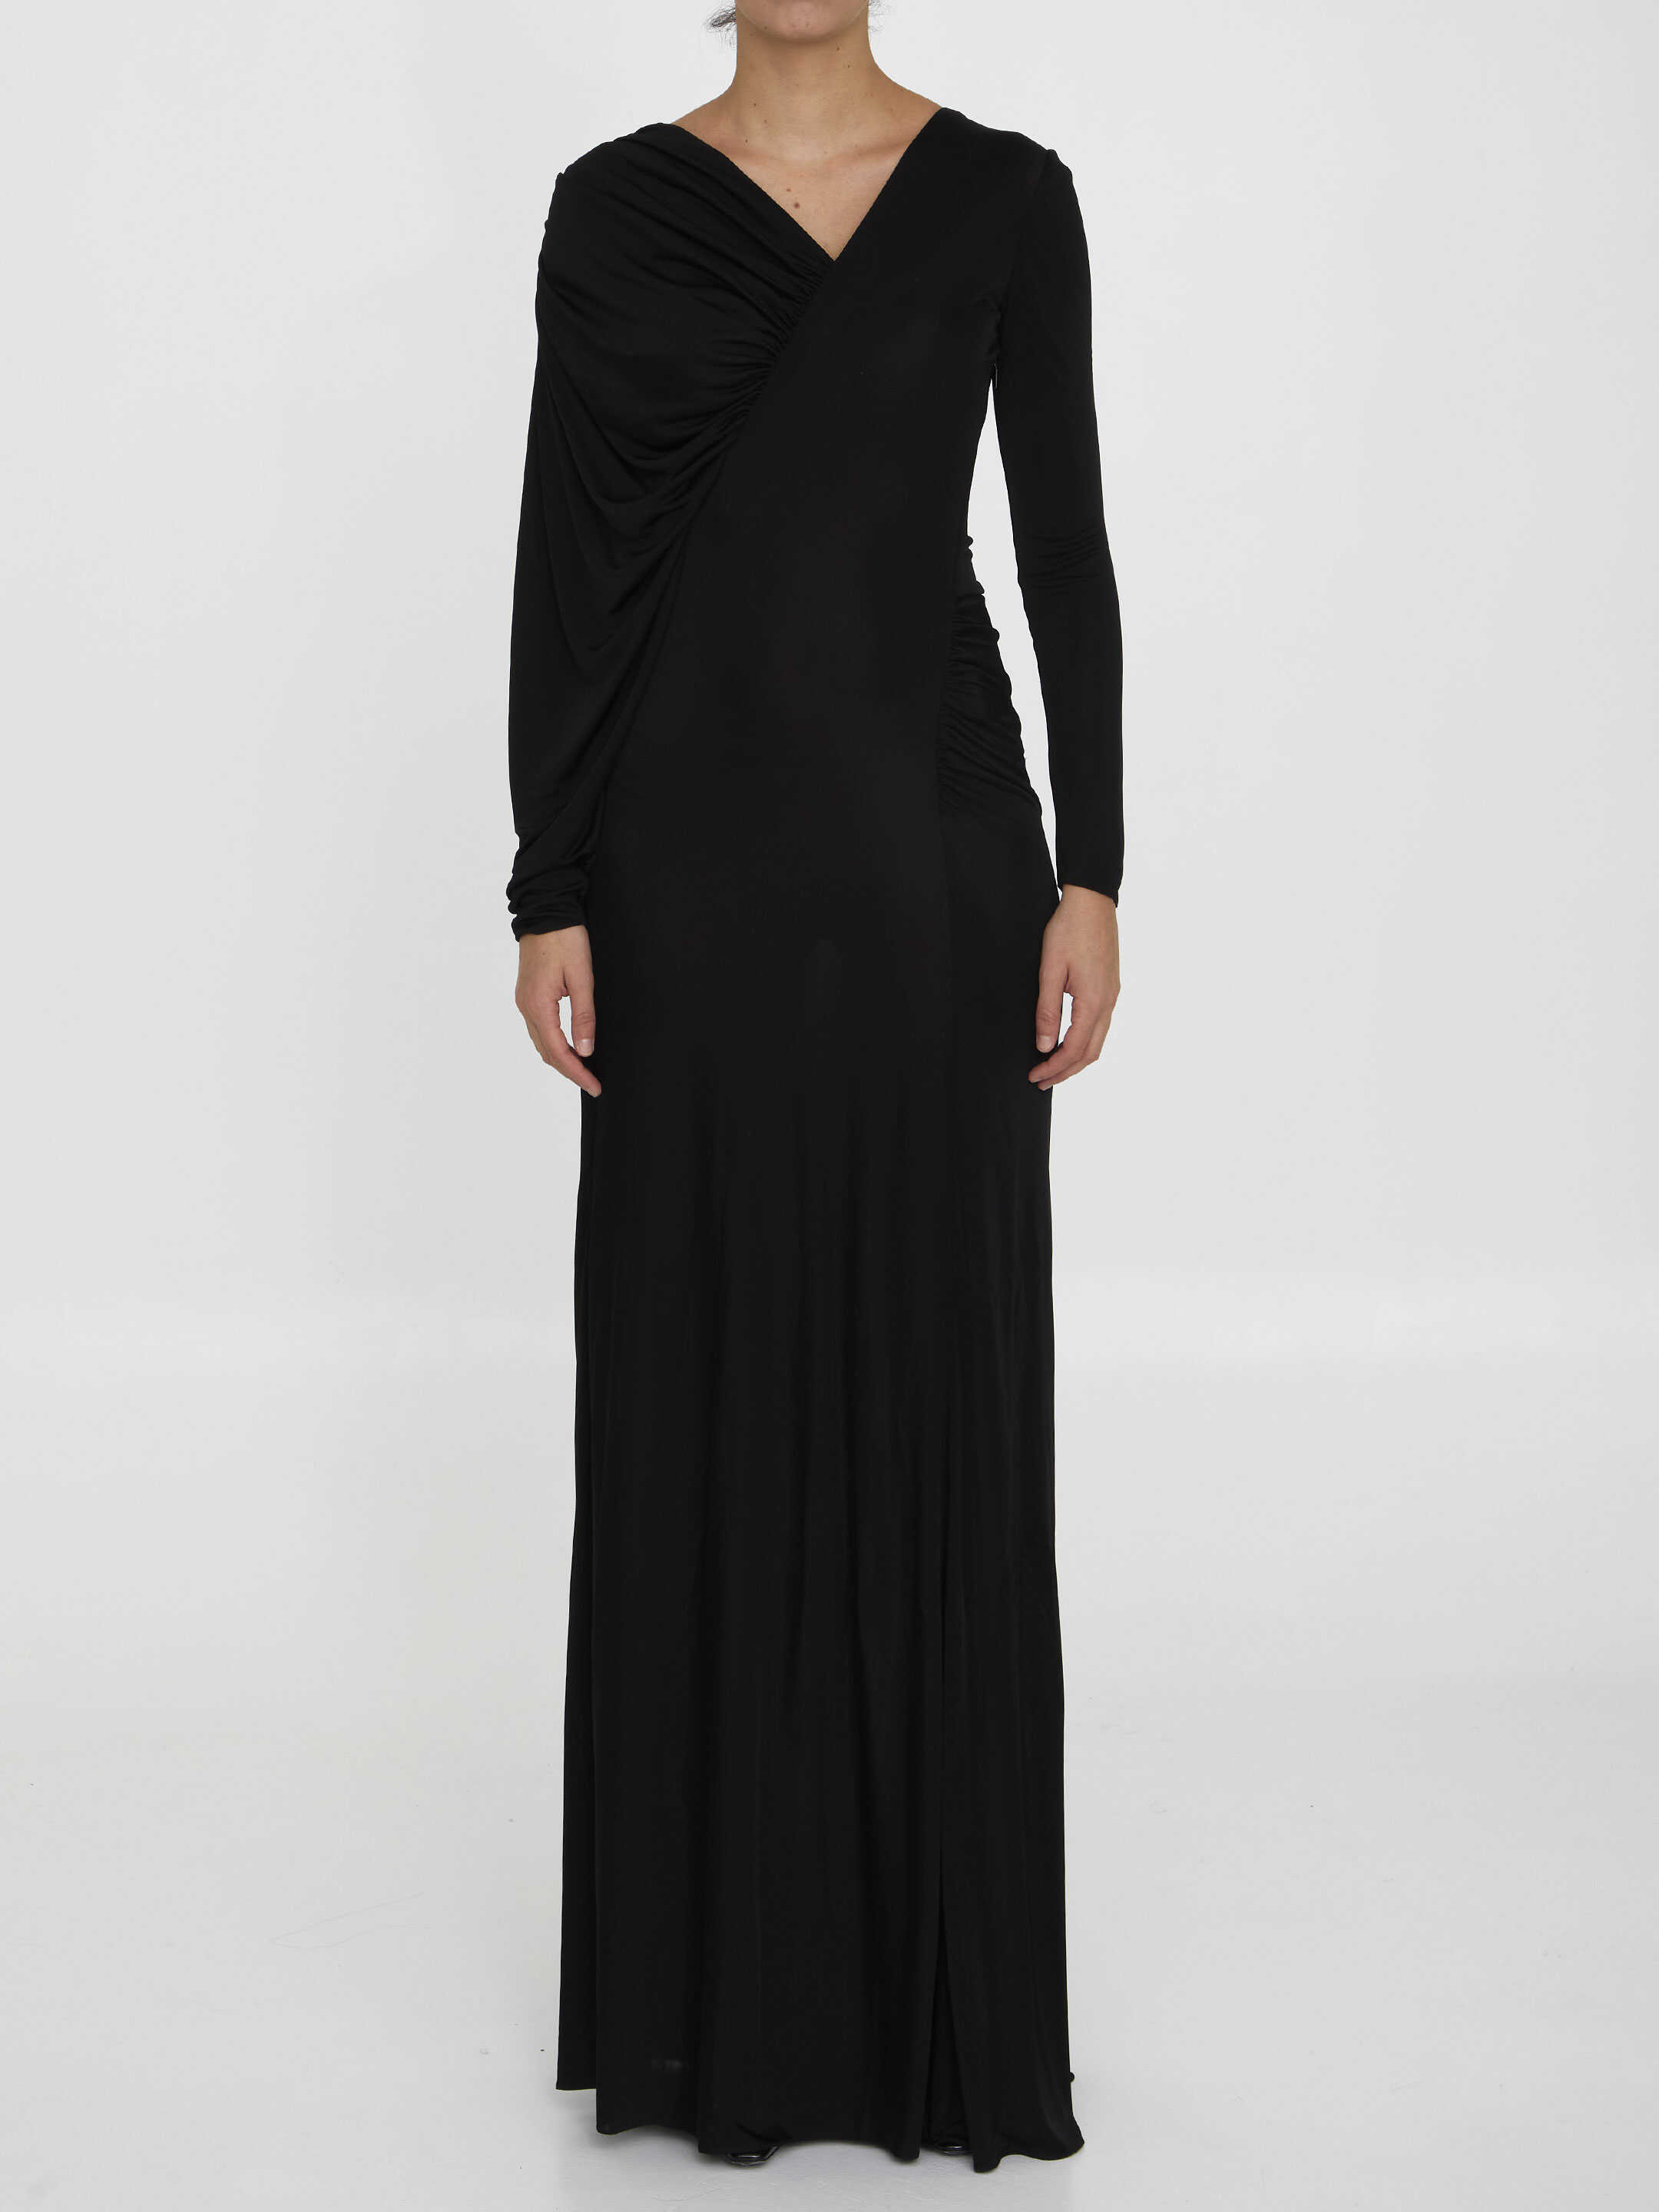 Saint Laurent Shiny Jersey Dress BLACK